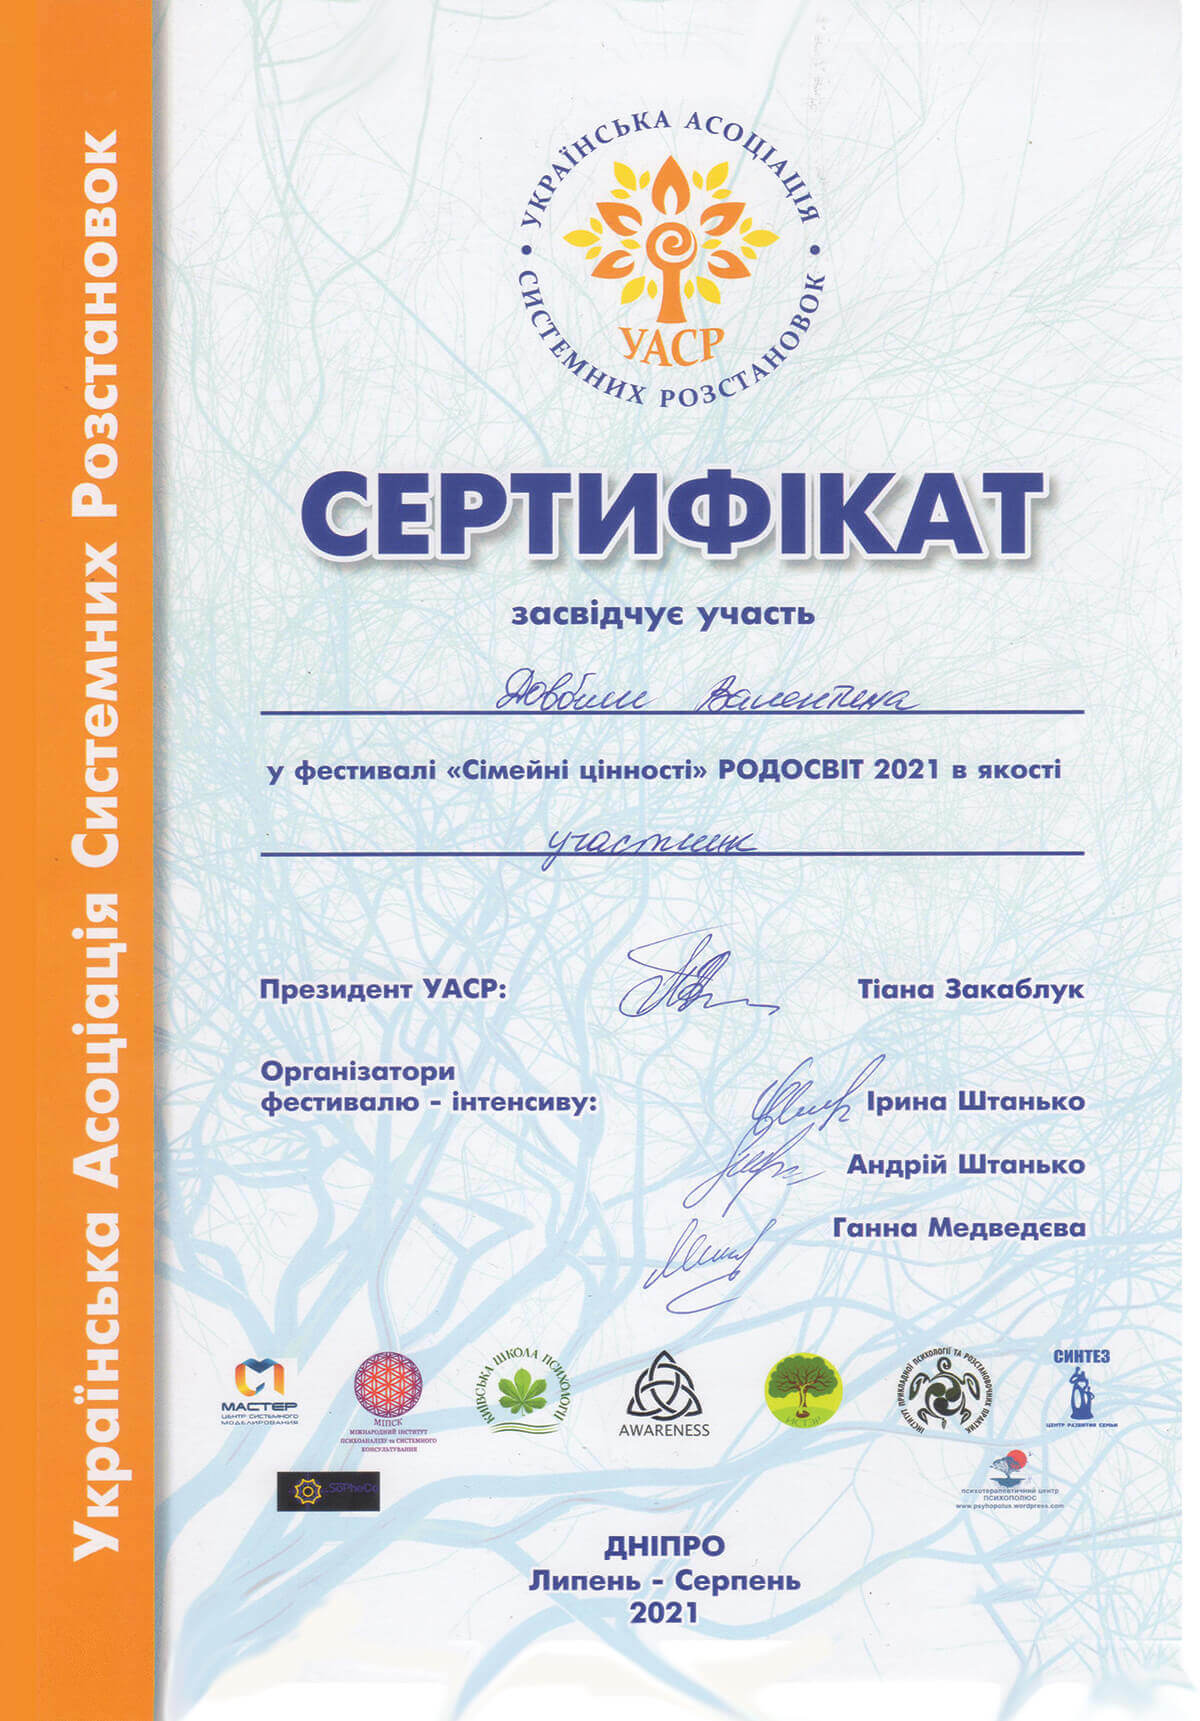 Сертификат Валентина Довбыш